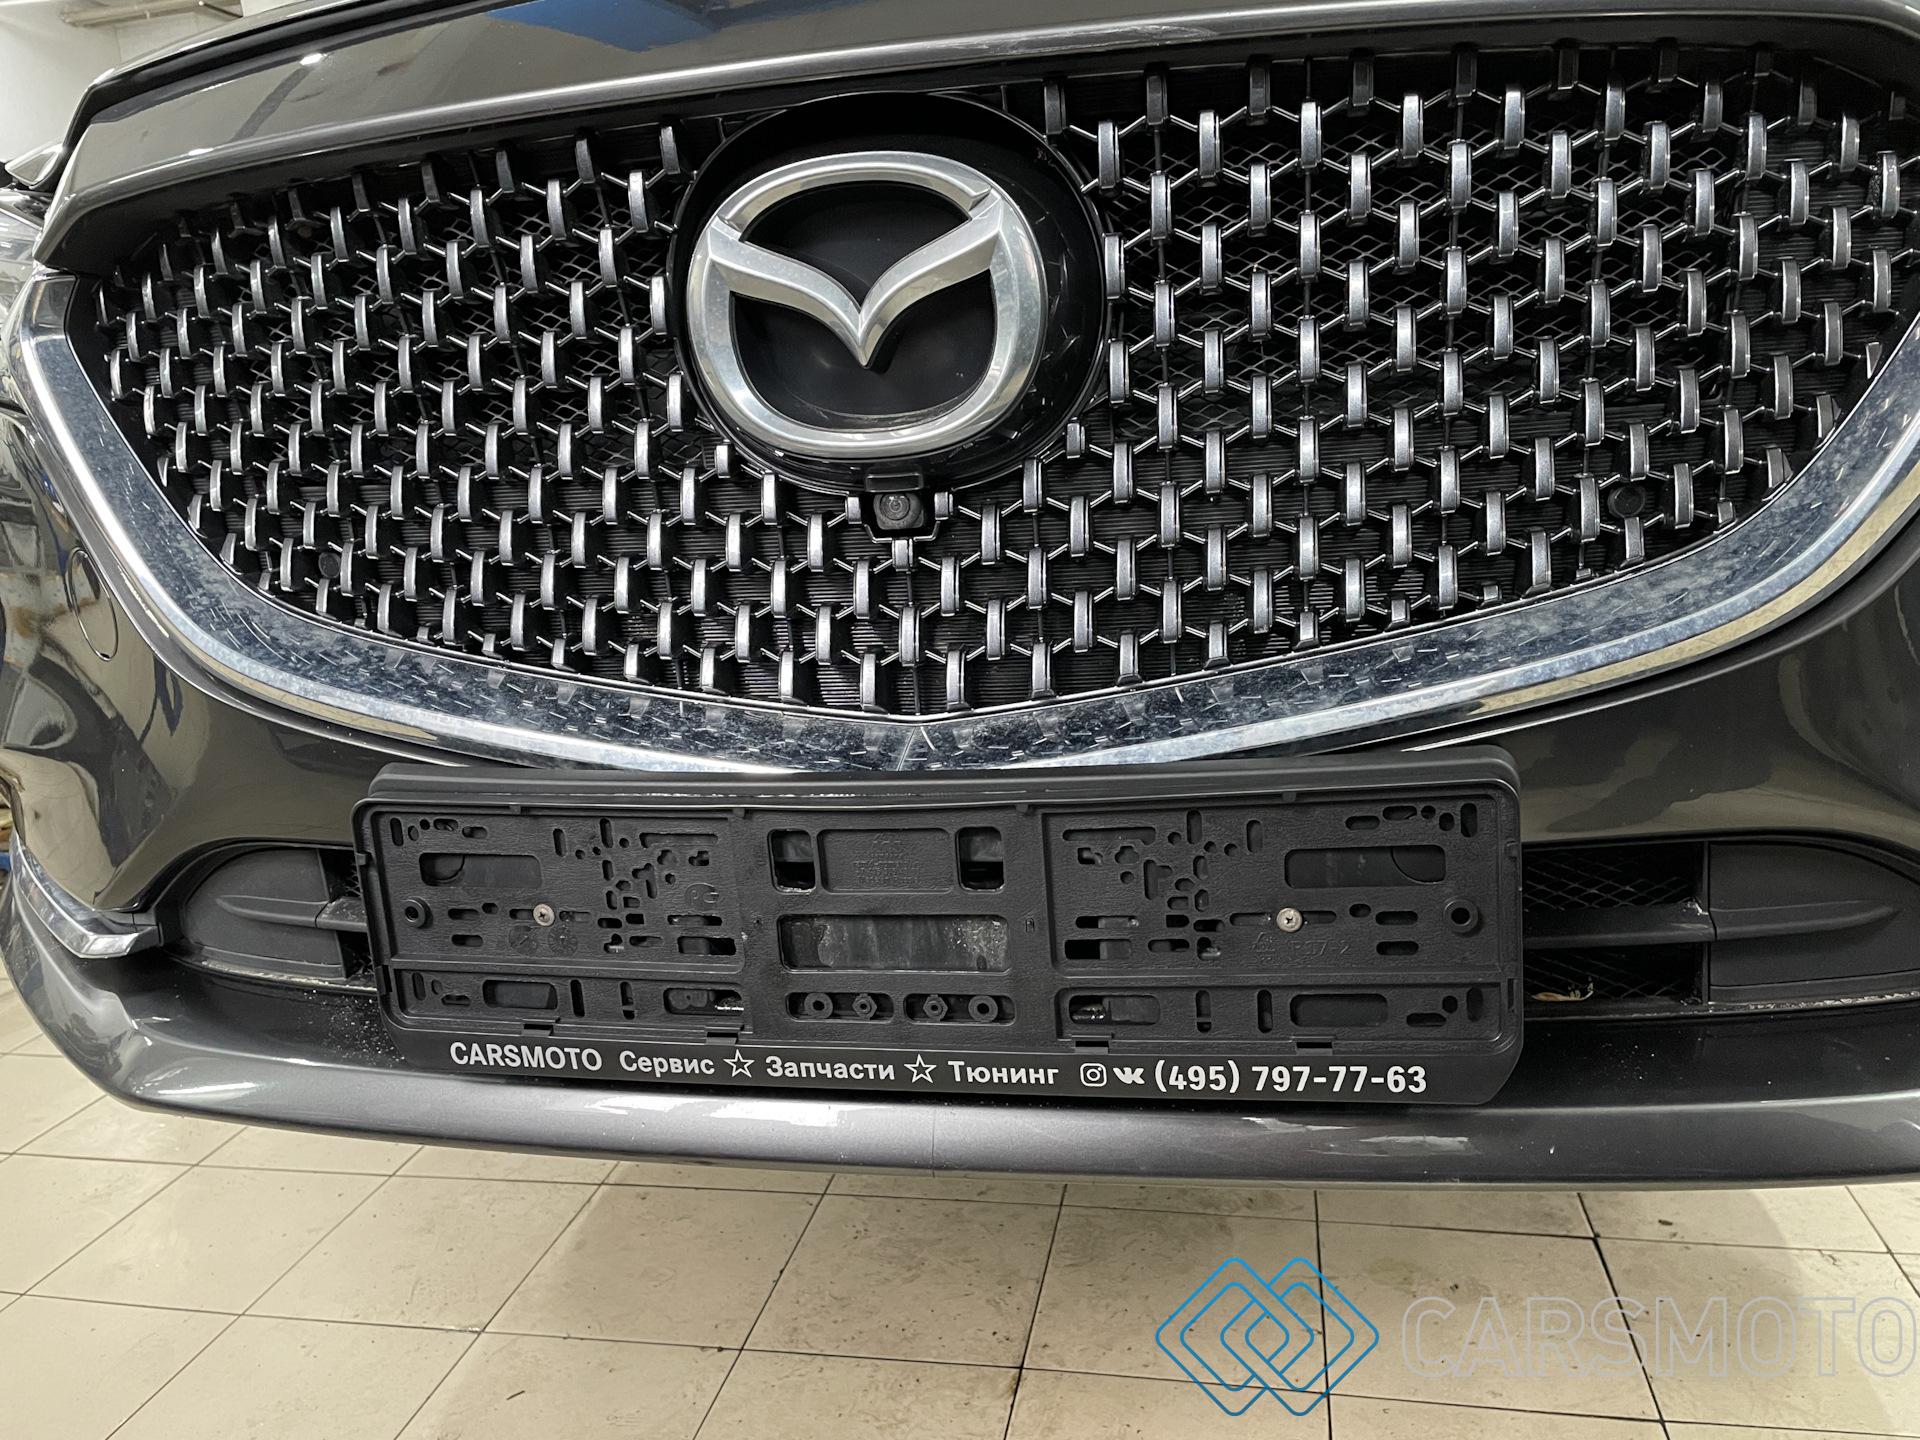 олная аппаратная замена масла АКПП Mazda 6 2.5T (GL)